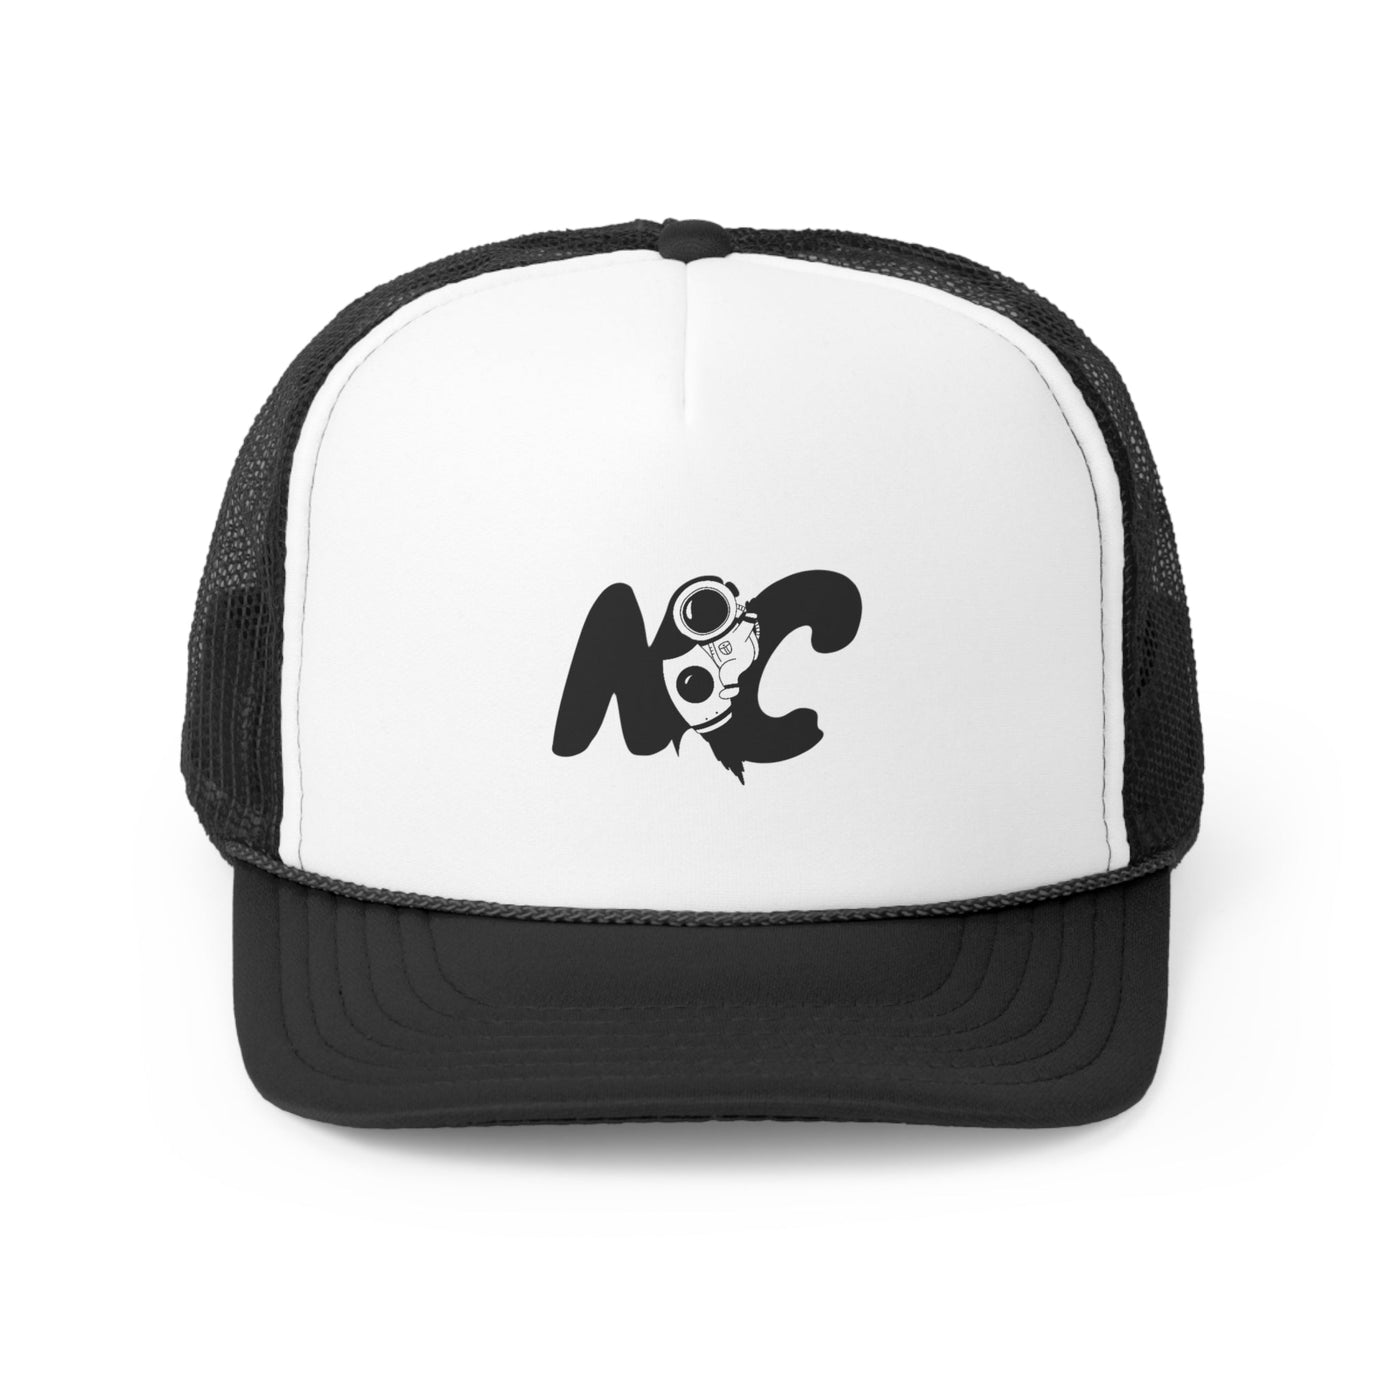 Hats - NoCeilingsClothing